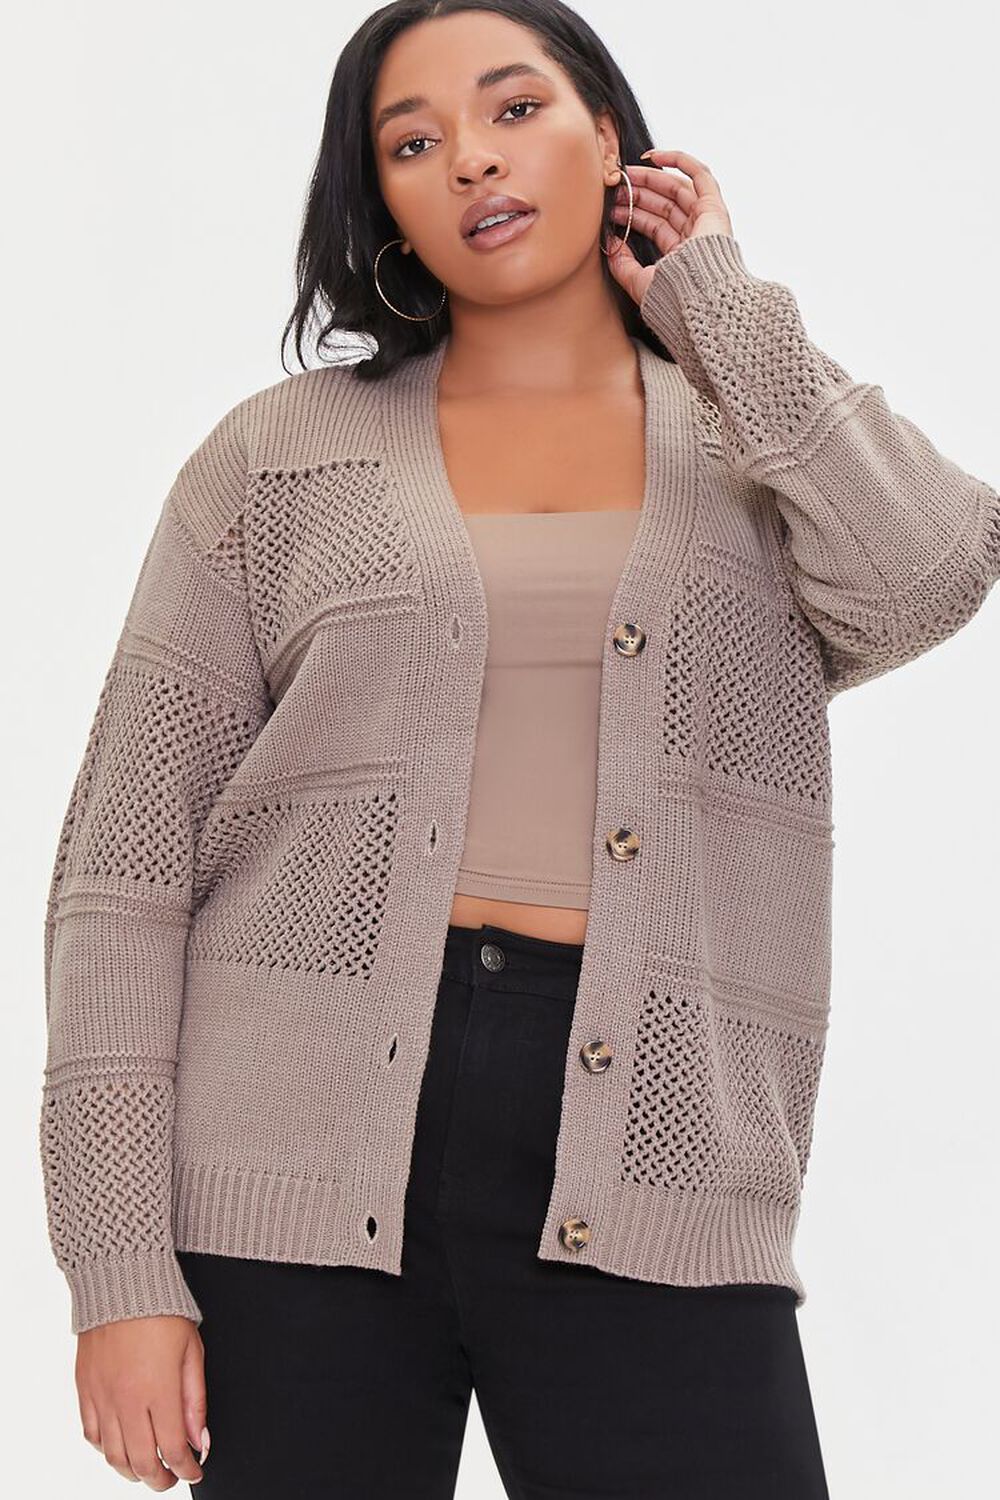 GREY Plus Size Open-Knit Cardigan Sweater, image 1